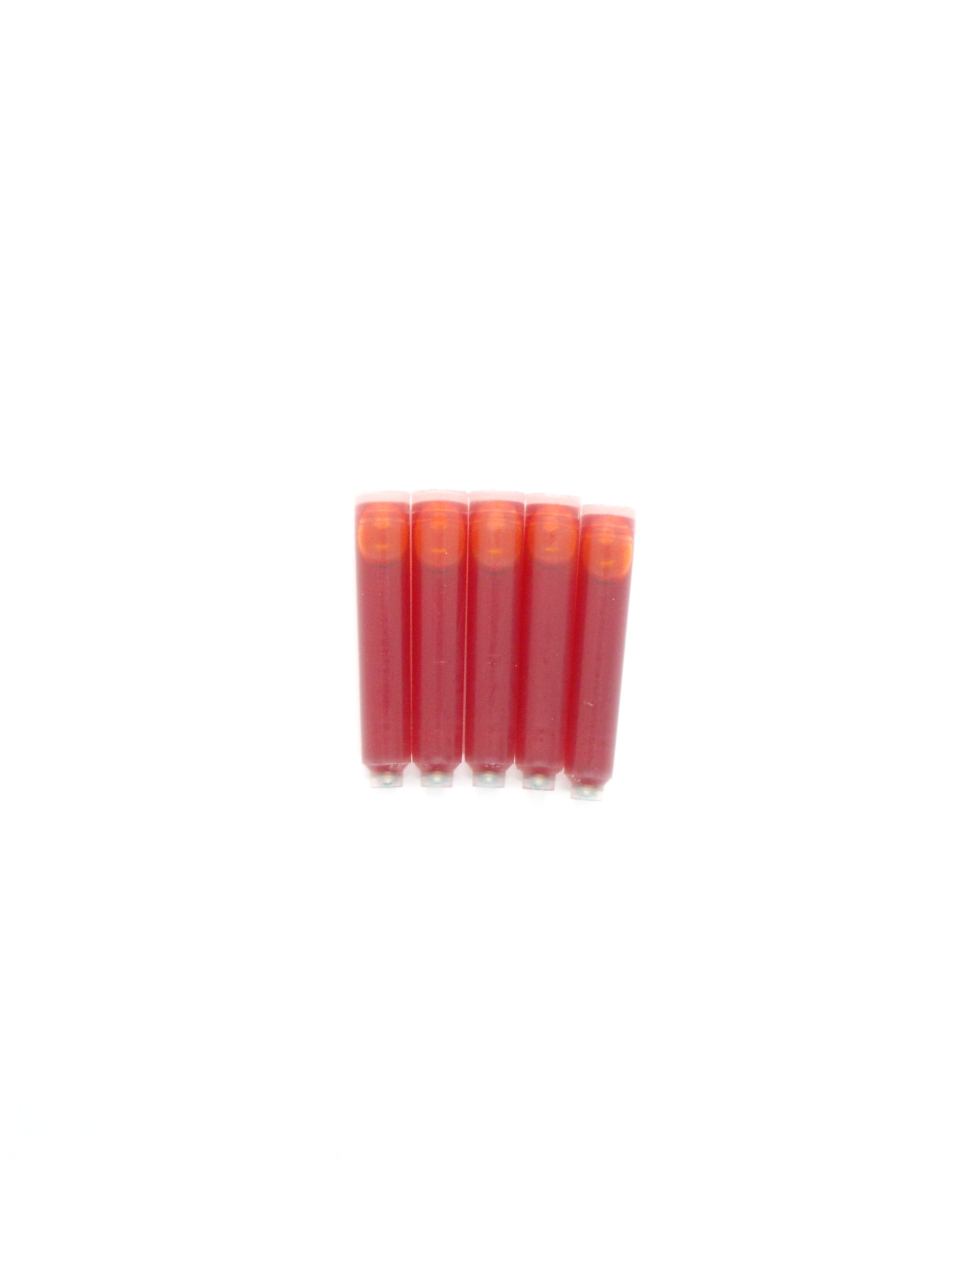 PenConverter Ink Cartridges For Ducati Fountain Pens (Orange)